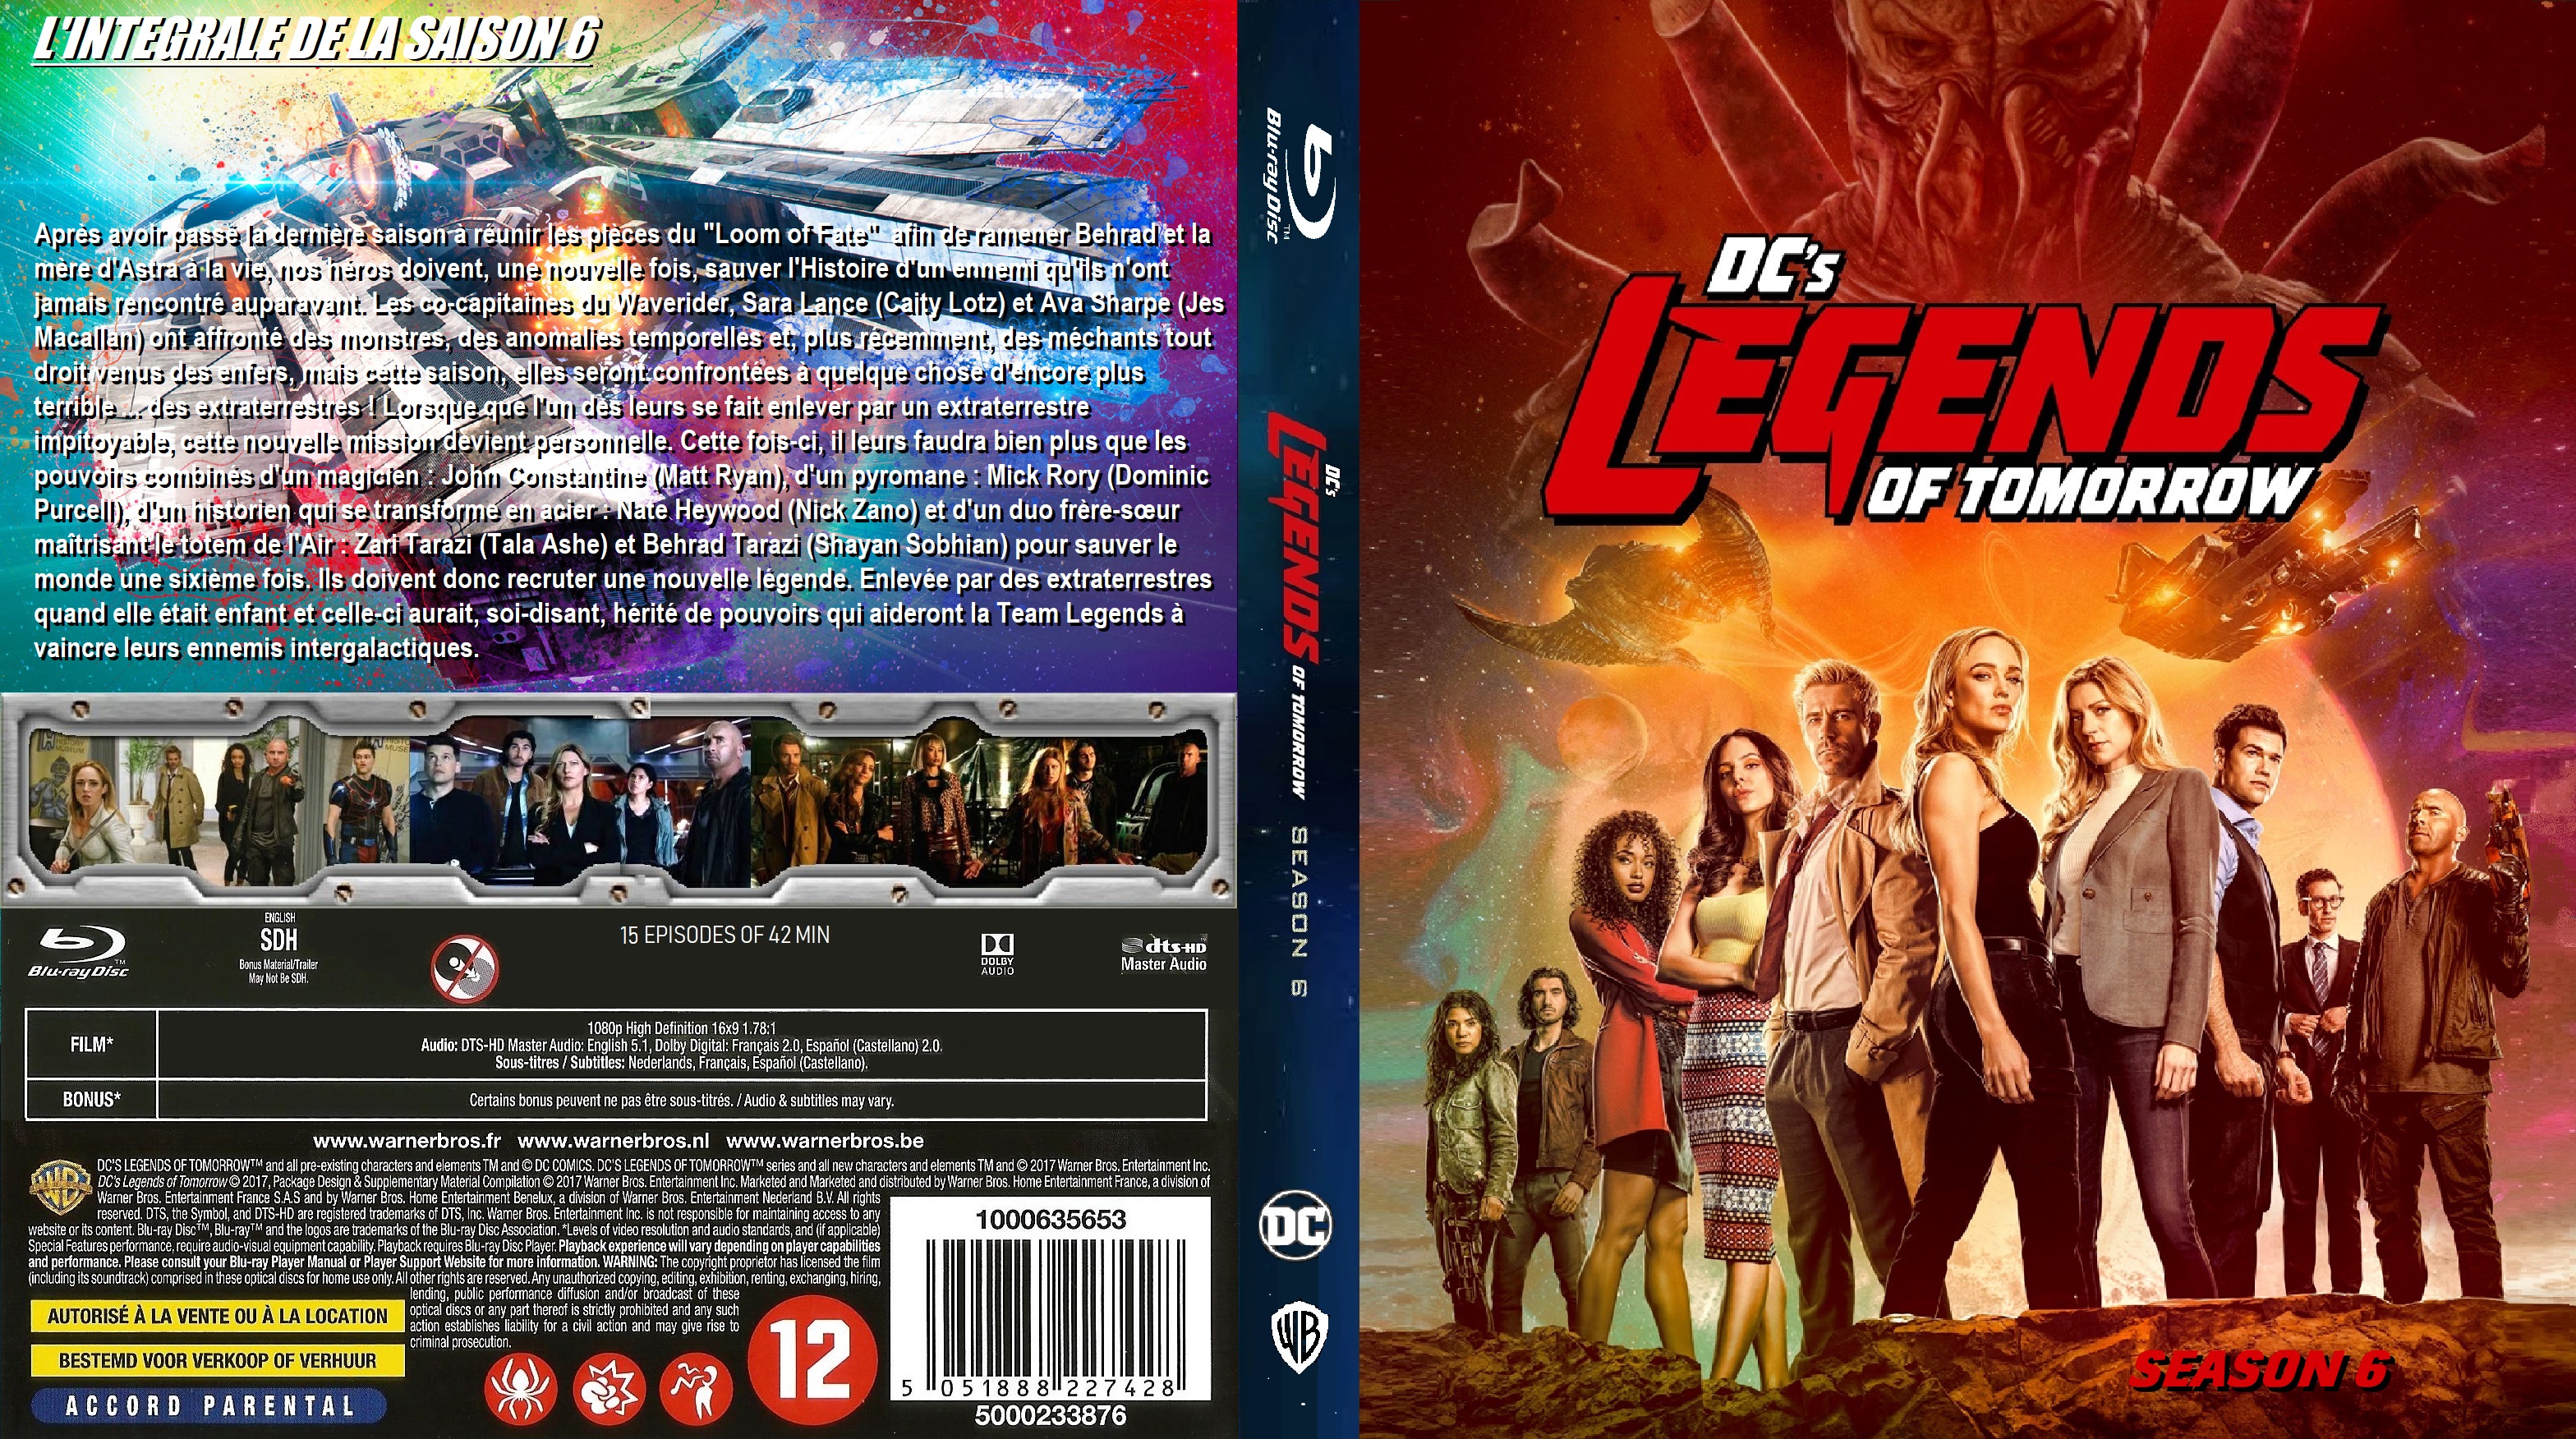 Jaquette DVD Legends of tomorrow saison 6 custom (BLU-RAY)